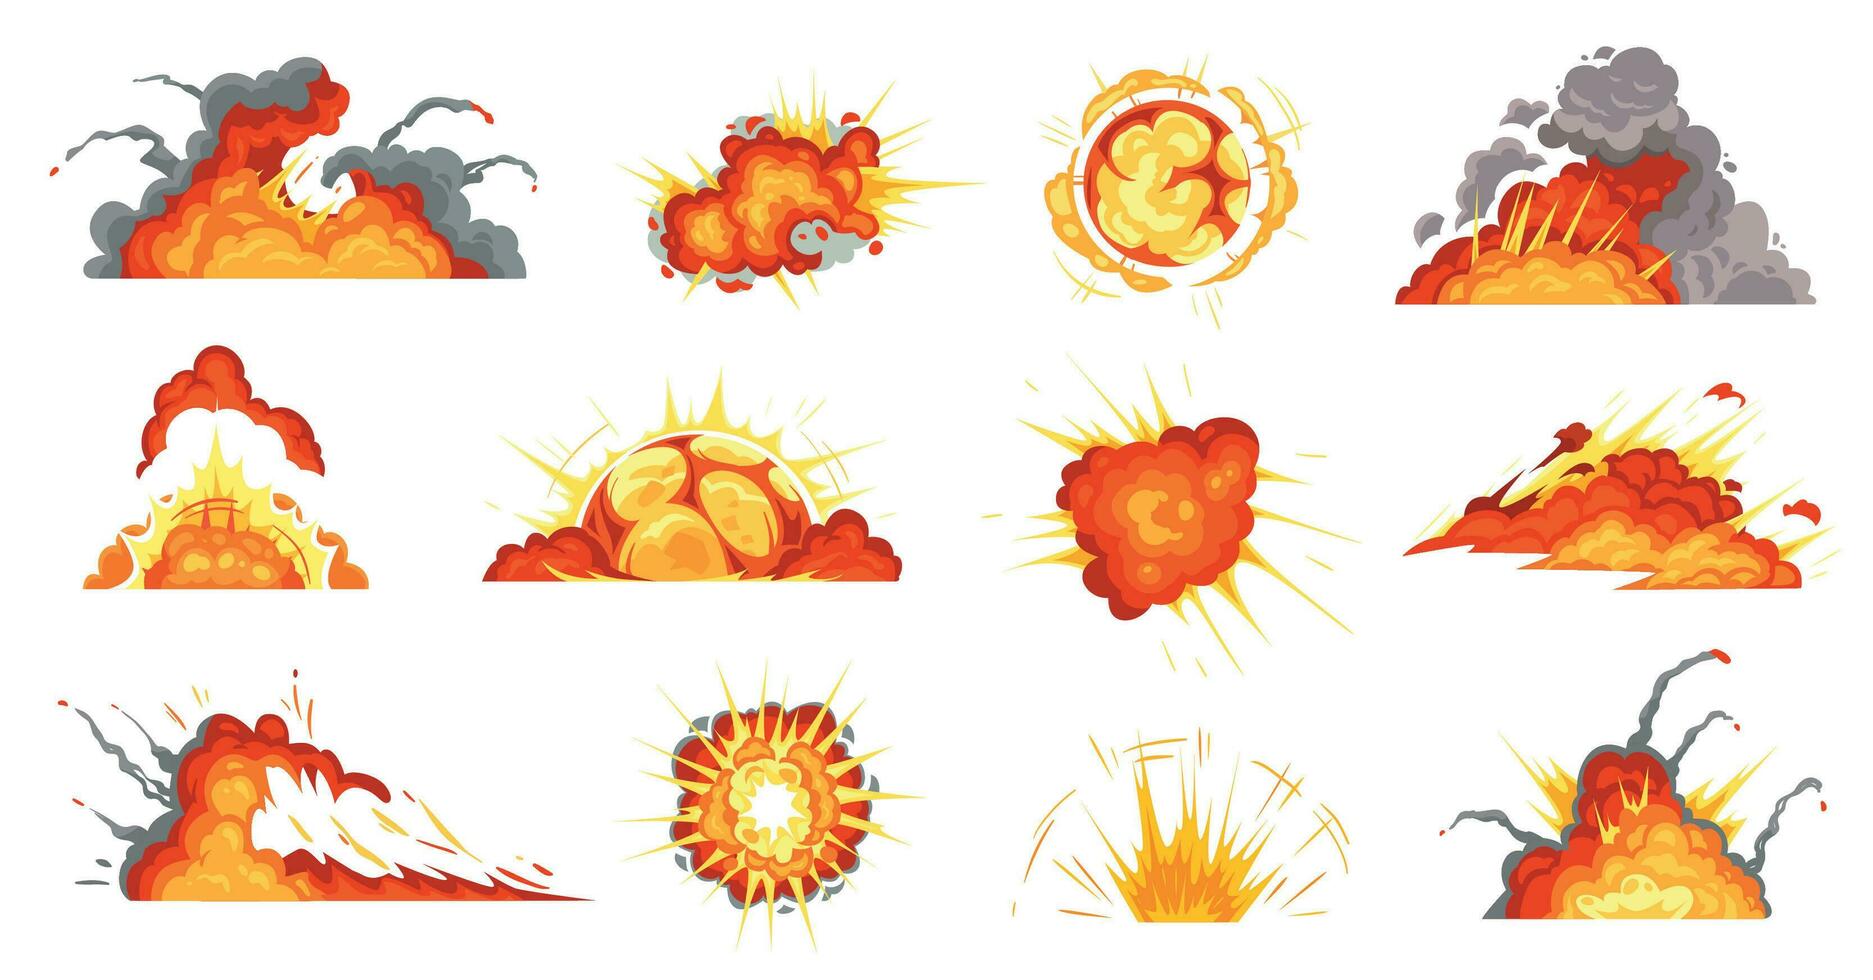 Cartoon explosions. Exploding bomb, fire cloud and explosion burst vector illustration set